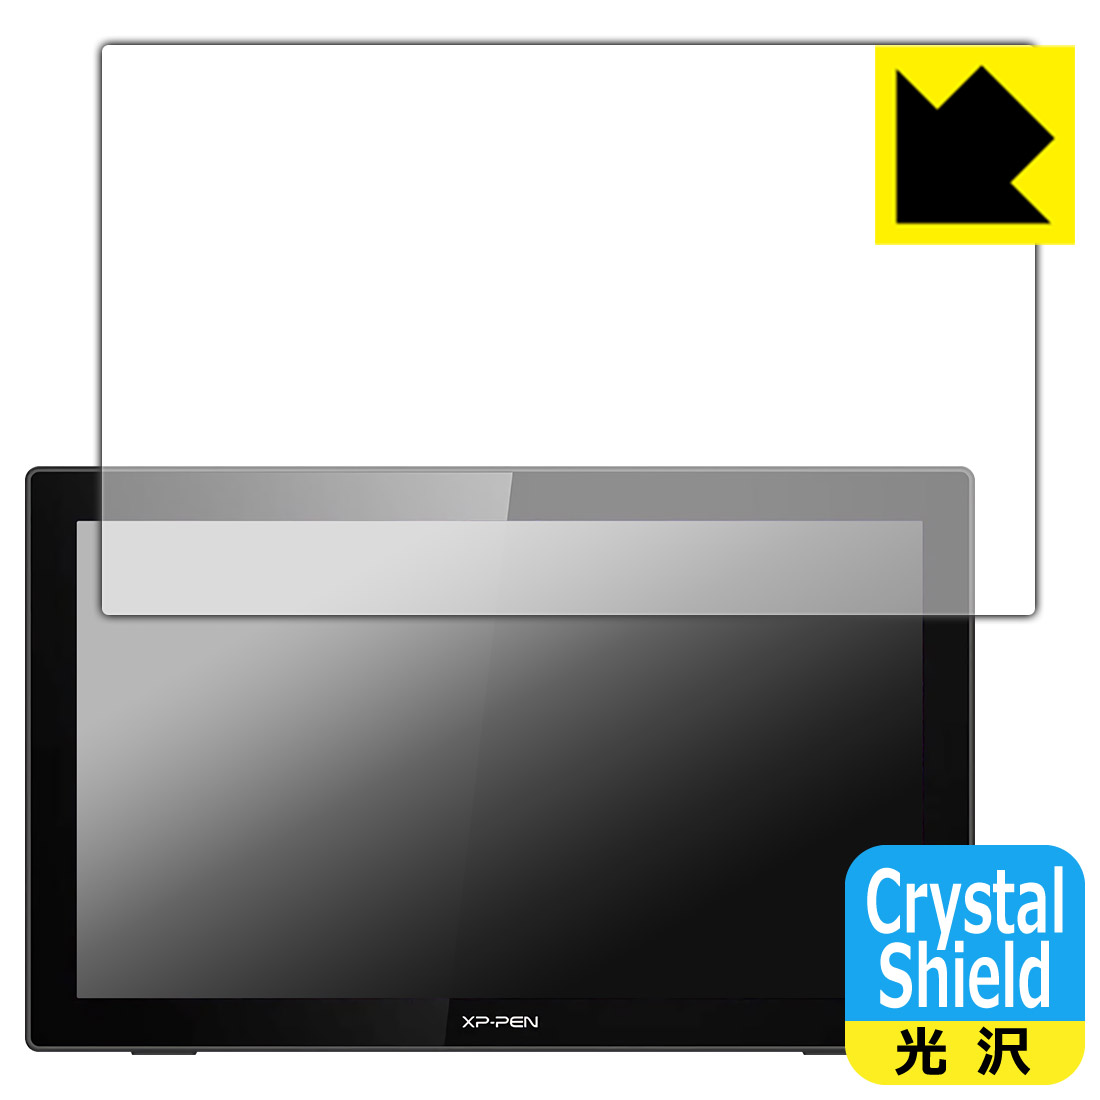 Crystal Shield XP-Pen Artist 22 セカンド (3枚セット) 日本製 自社製造直販